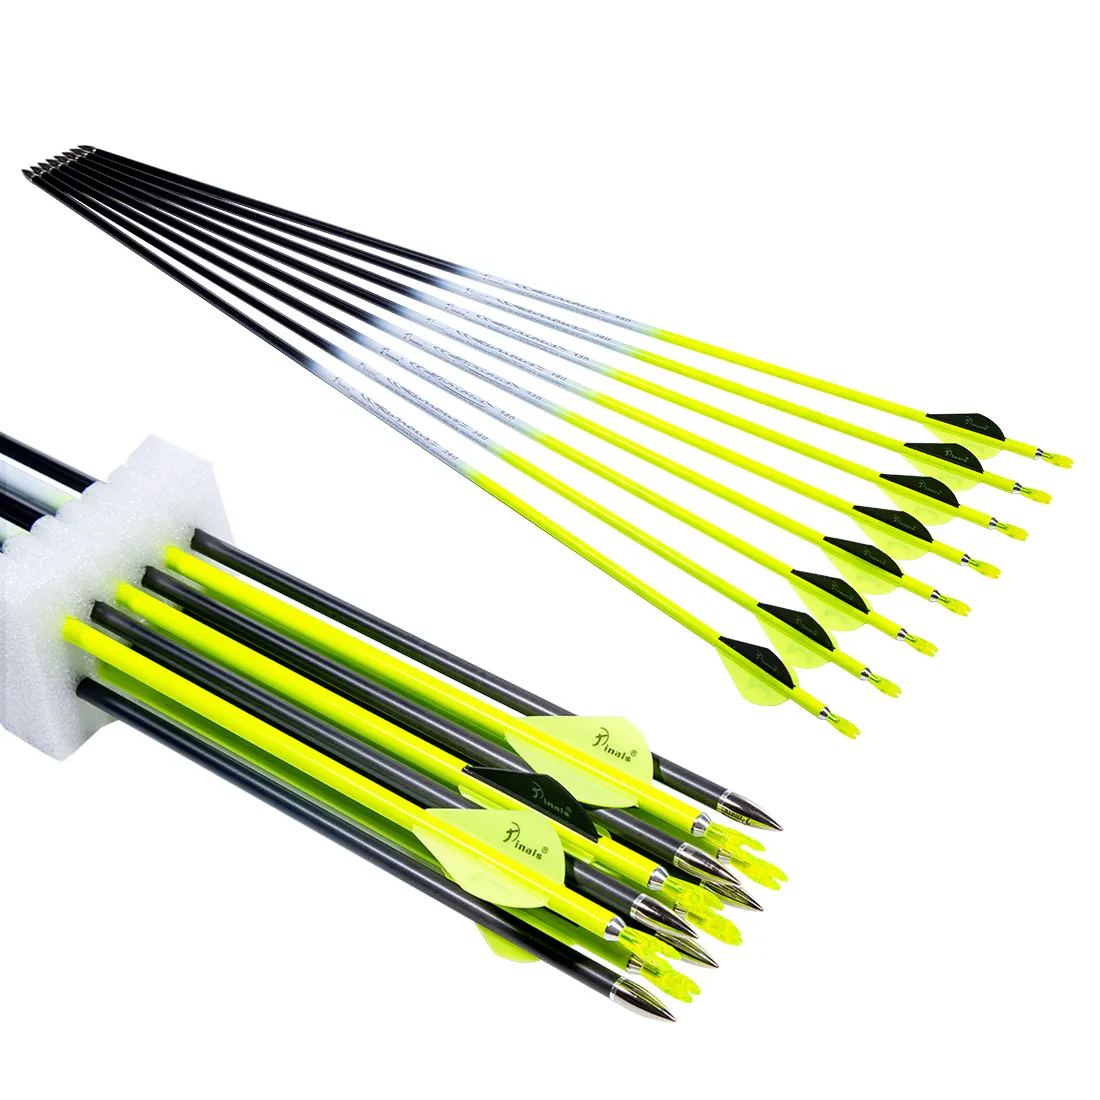 Pinals amarillo puro carbono flechas Spine 300 340 350 400 500 600 arco compuesto tiro con arco caza